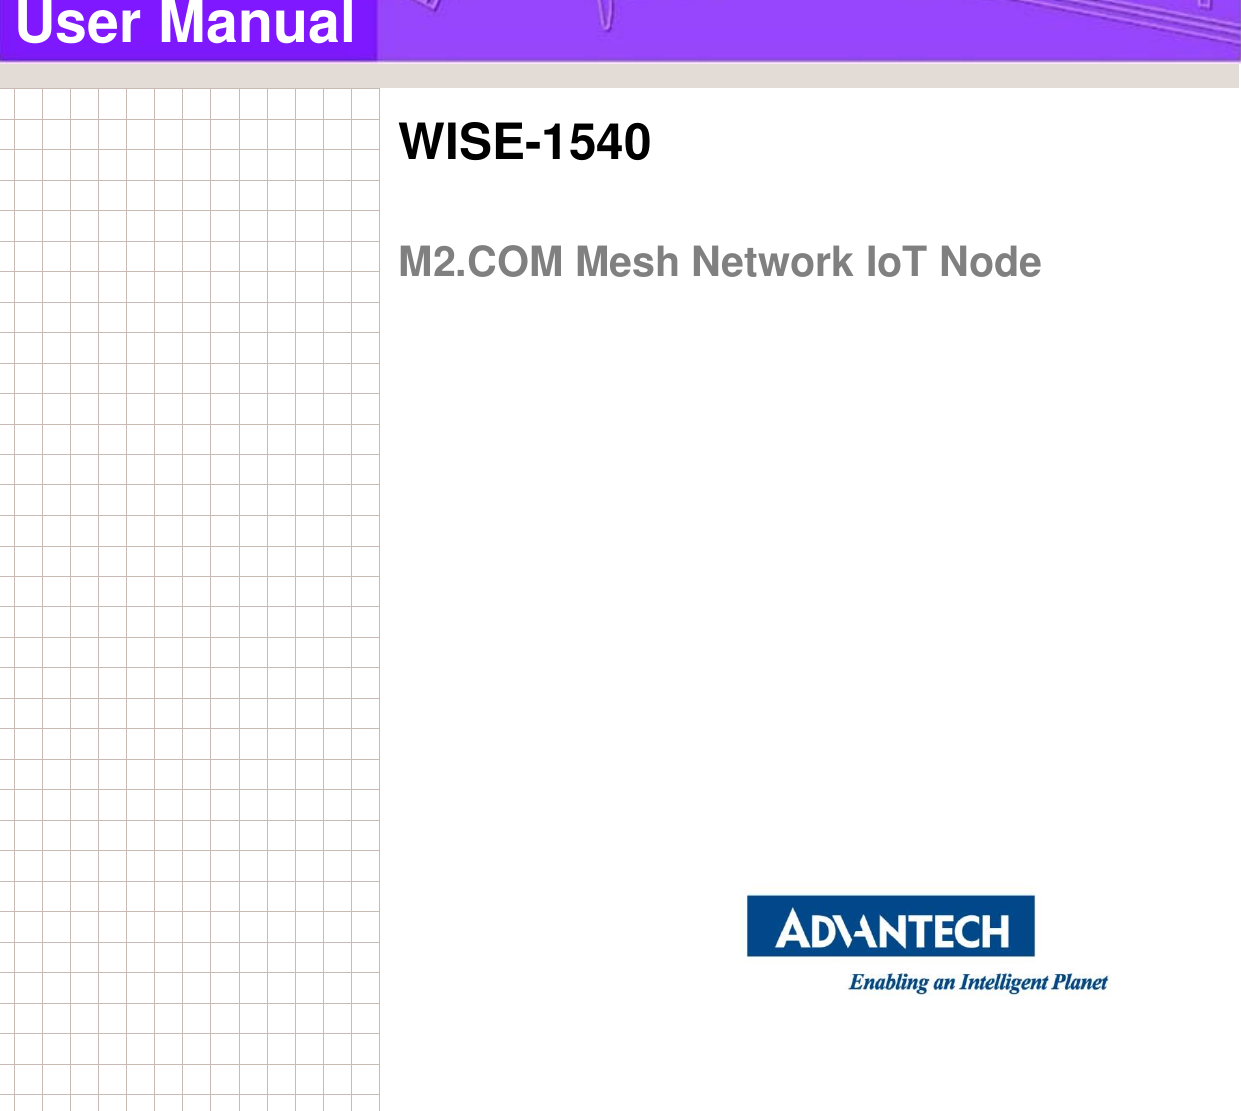                          User Manual  WISE-1540  M2.COM Mesh Network IoT Node                    